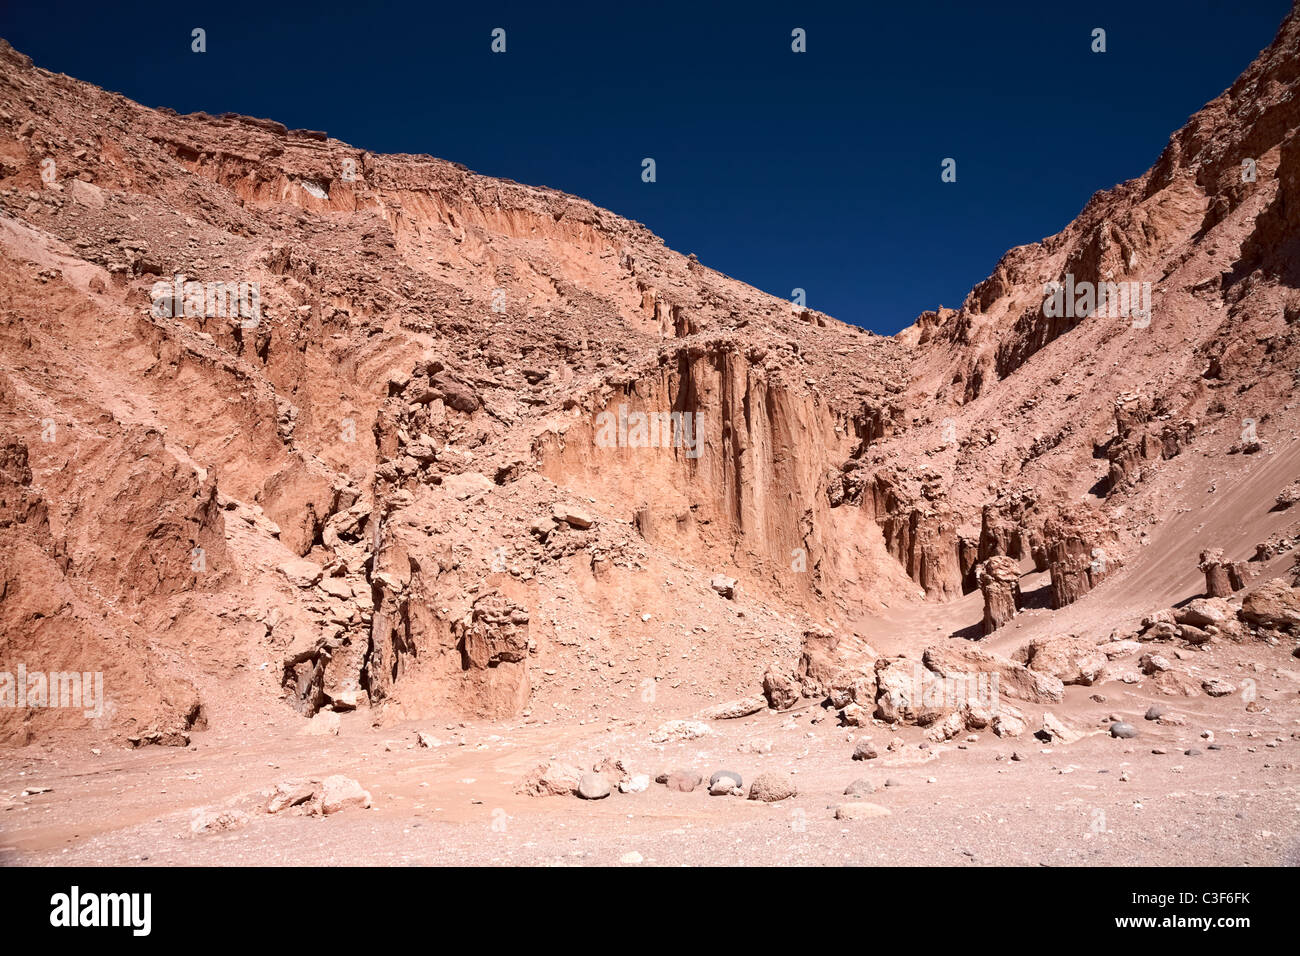 La Valle de la Muerte (Death Valley), il deserto di Atacama, Cile Foto Stock